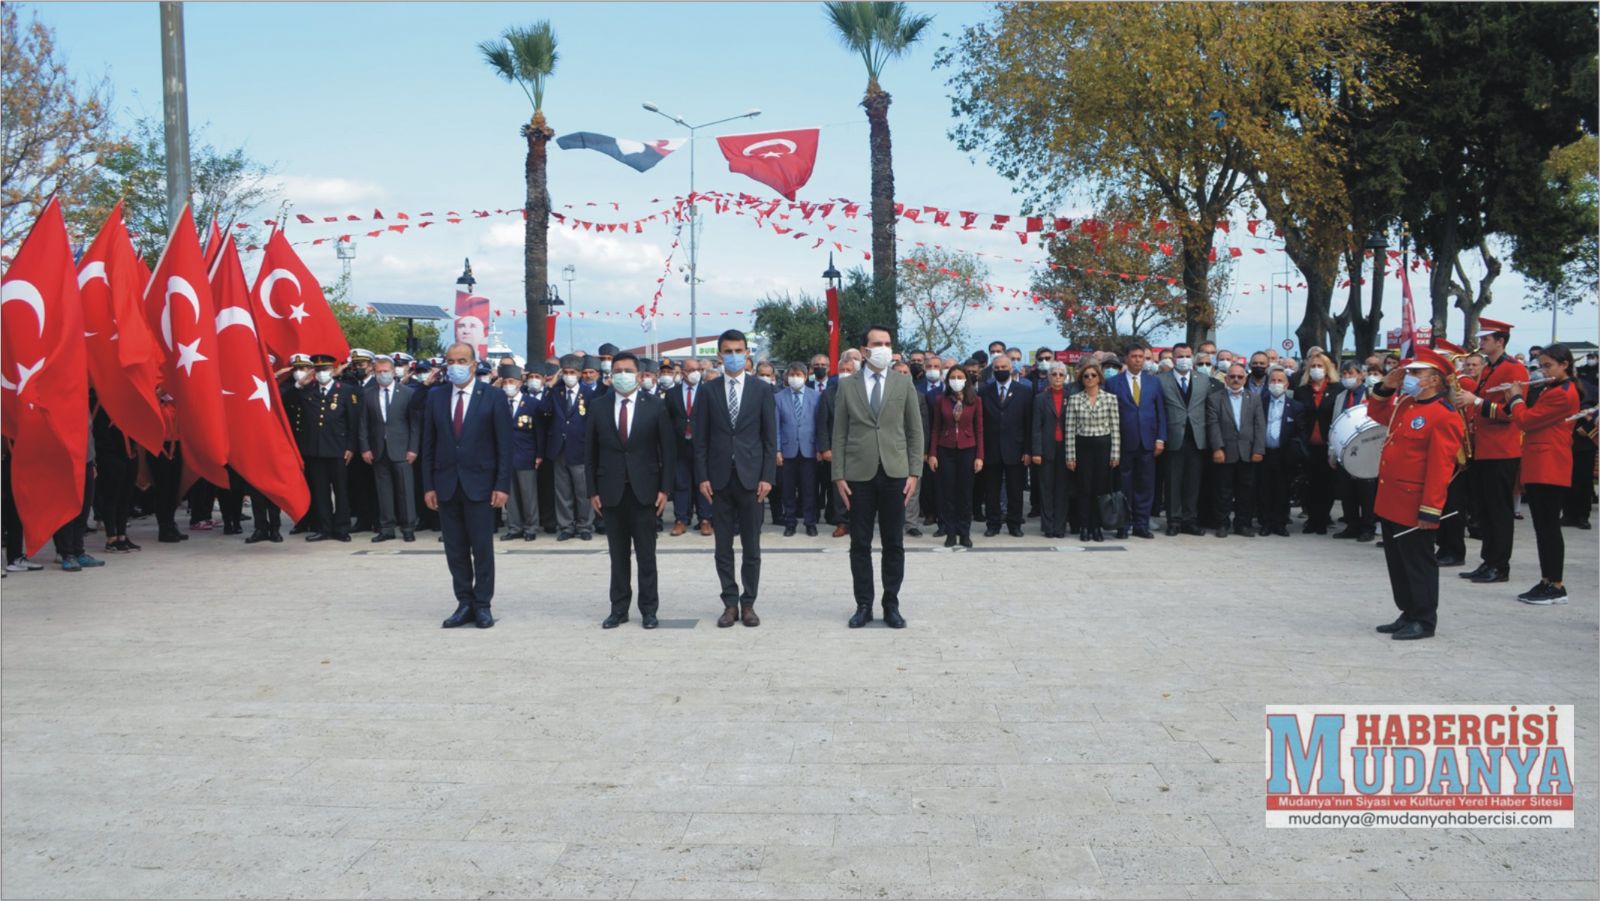 Mudanya'da Cokulu  Cumhuriyet Bayram Kutlamas